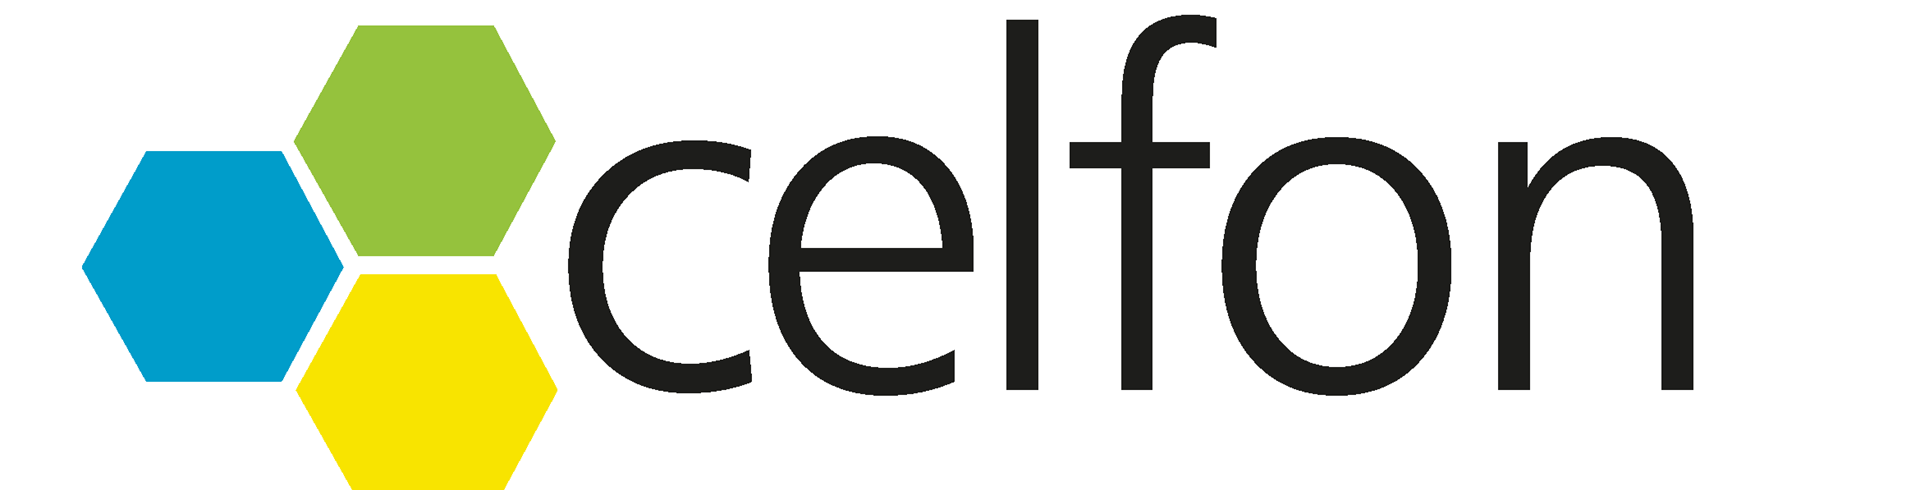 Celfon logo original.png